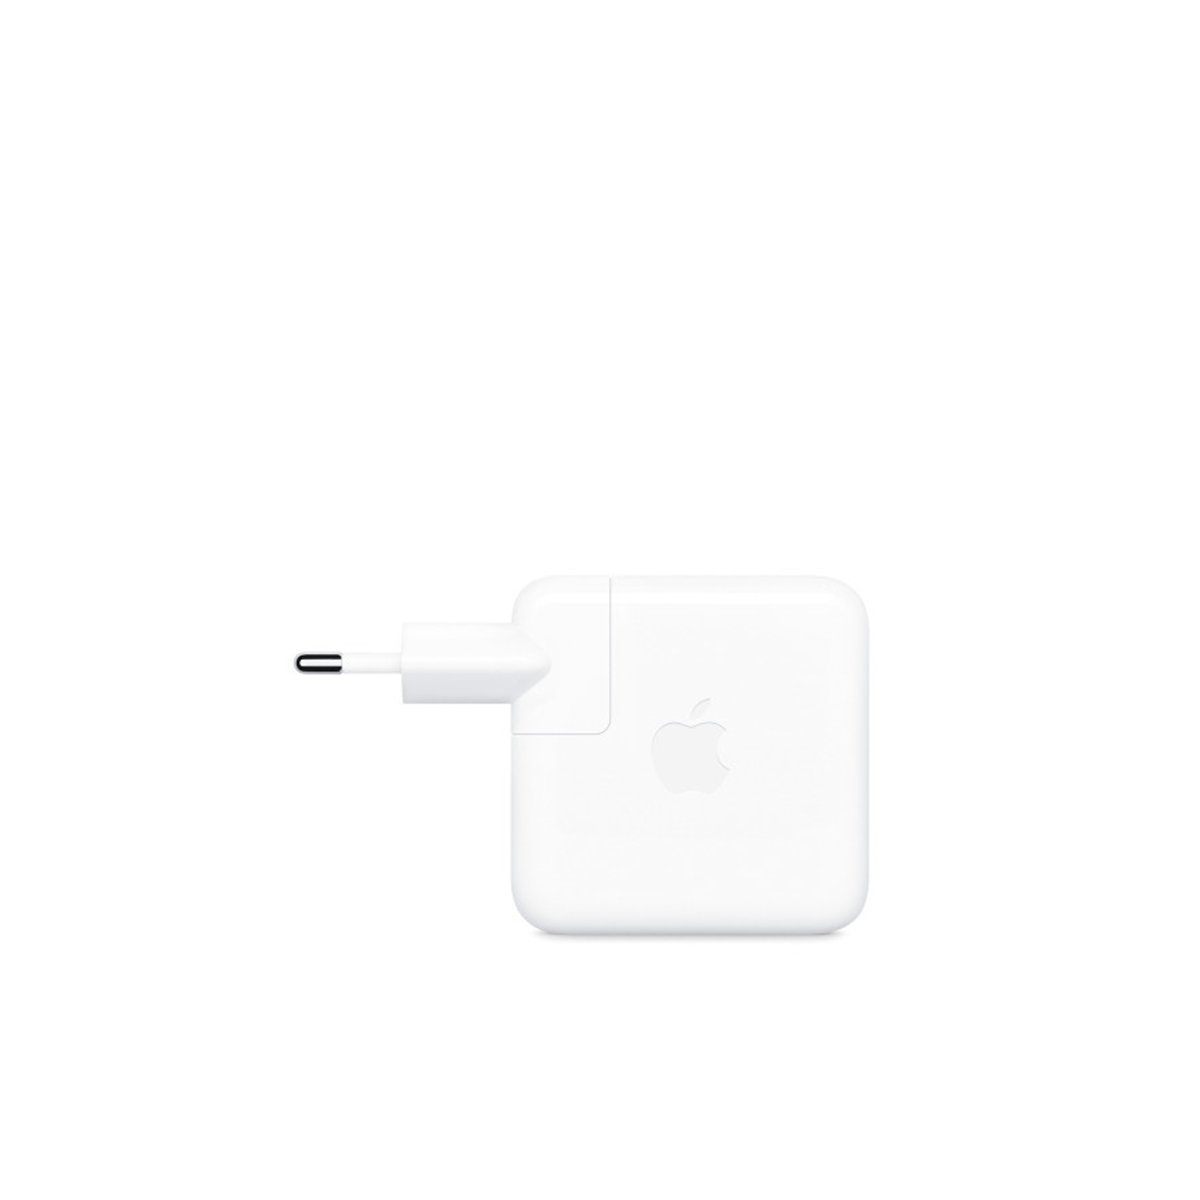  Apple 70W USB-C Power Adapter 